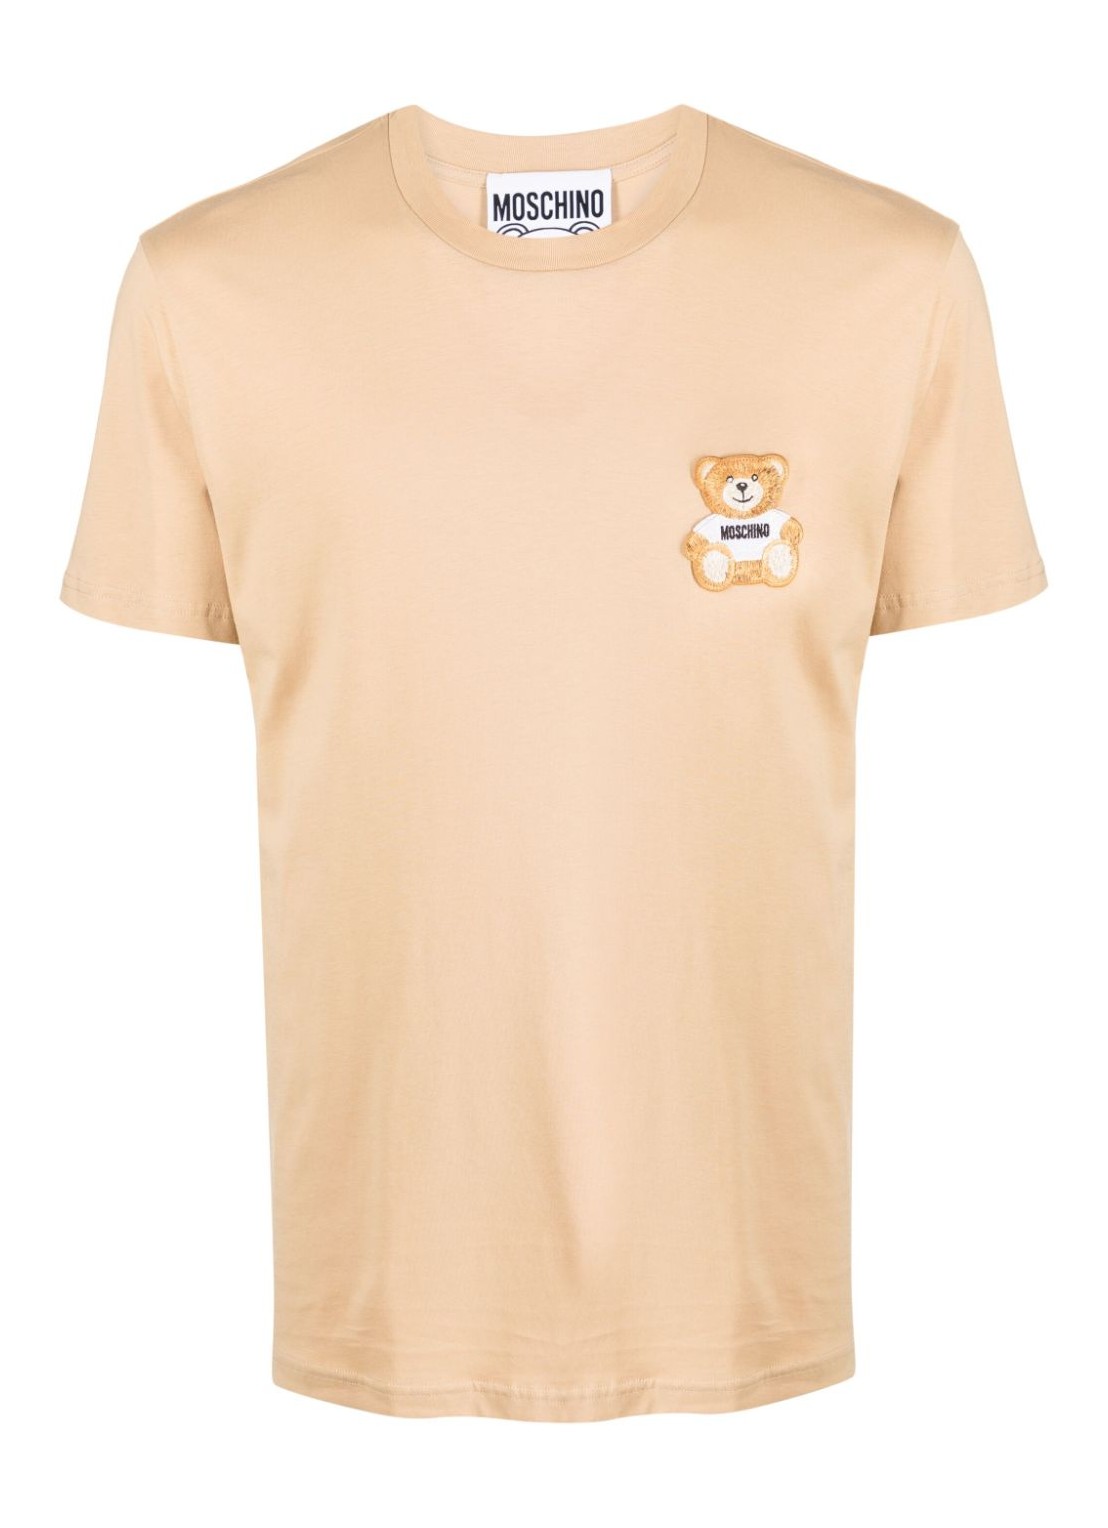 Camiseta moschino couture t-shirt man t-shirt 07232041 v0148 talla 46
 